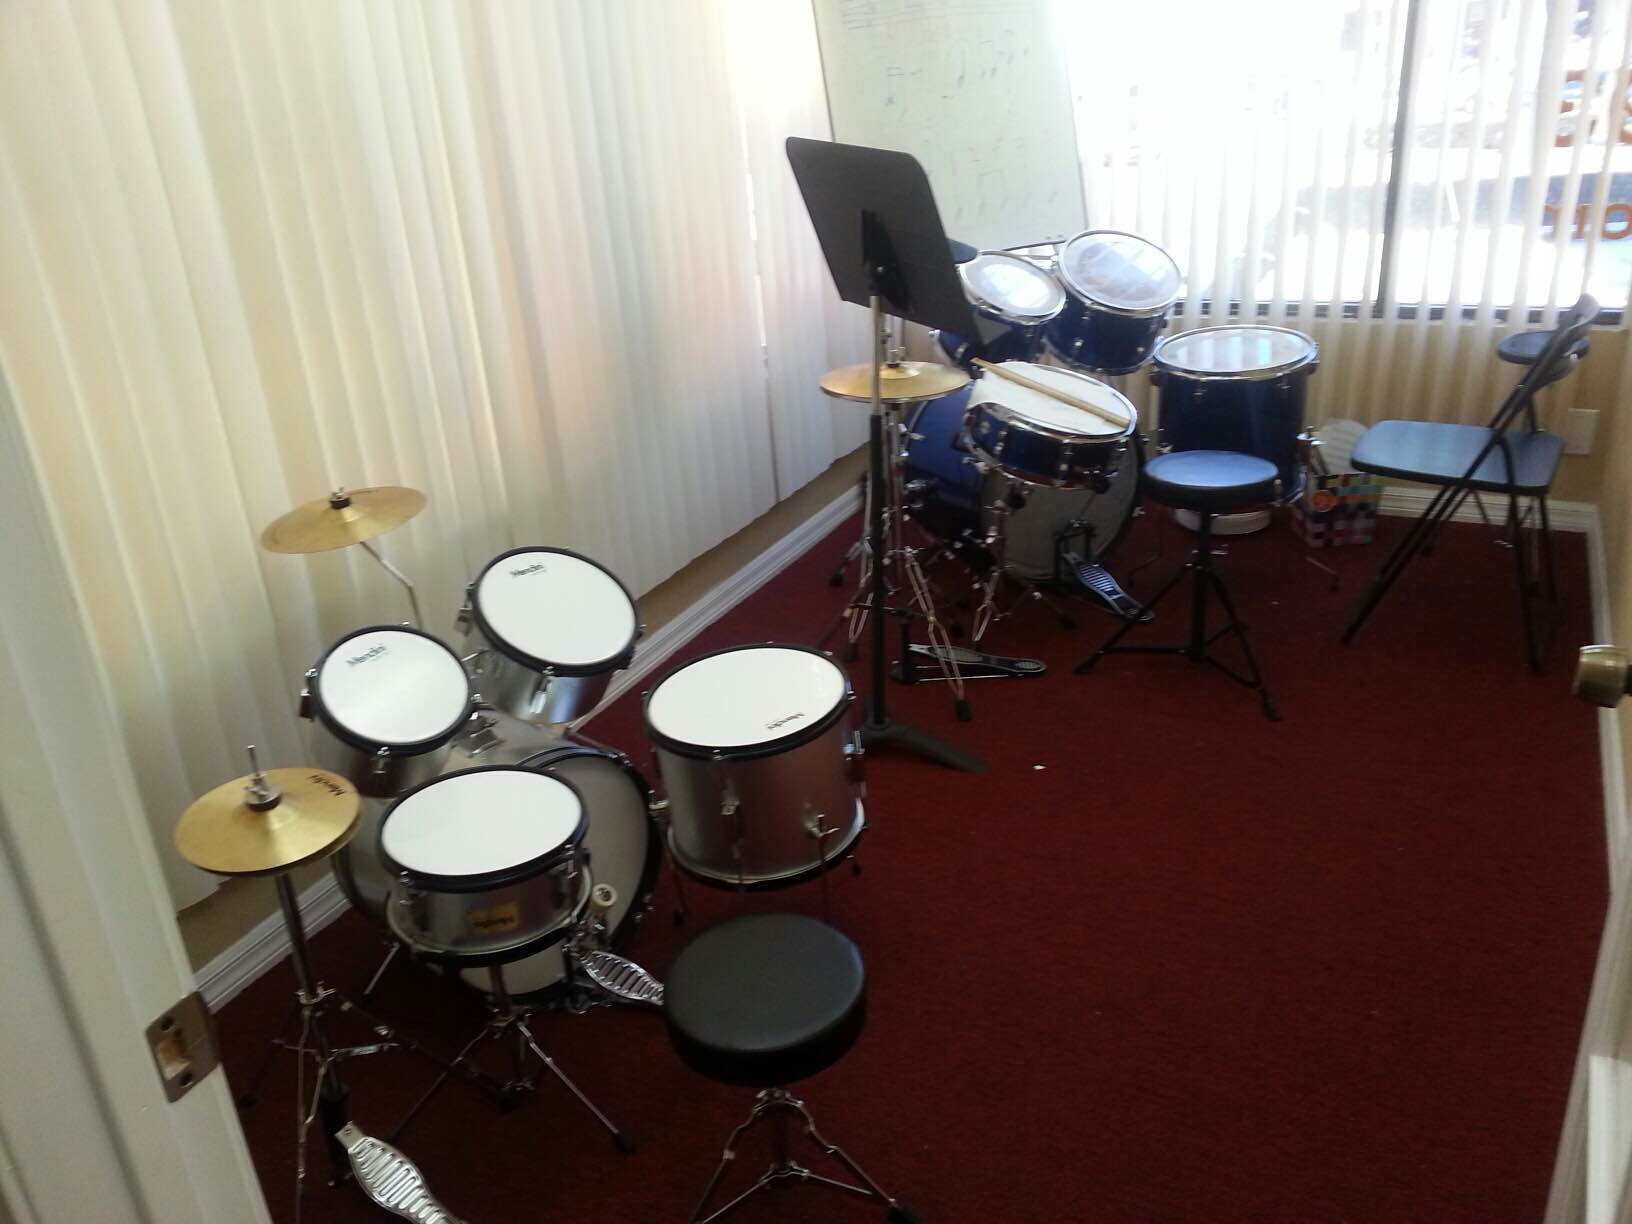 Drum room